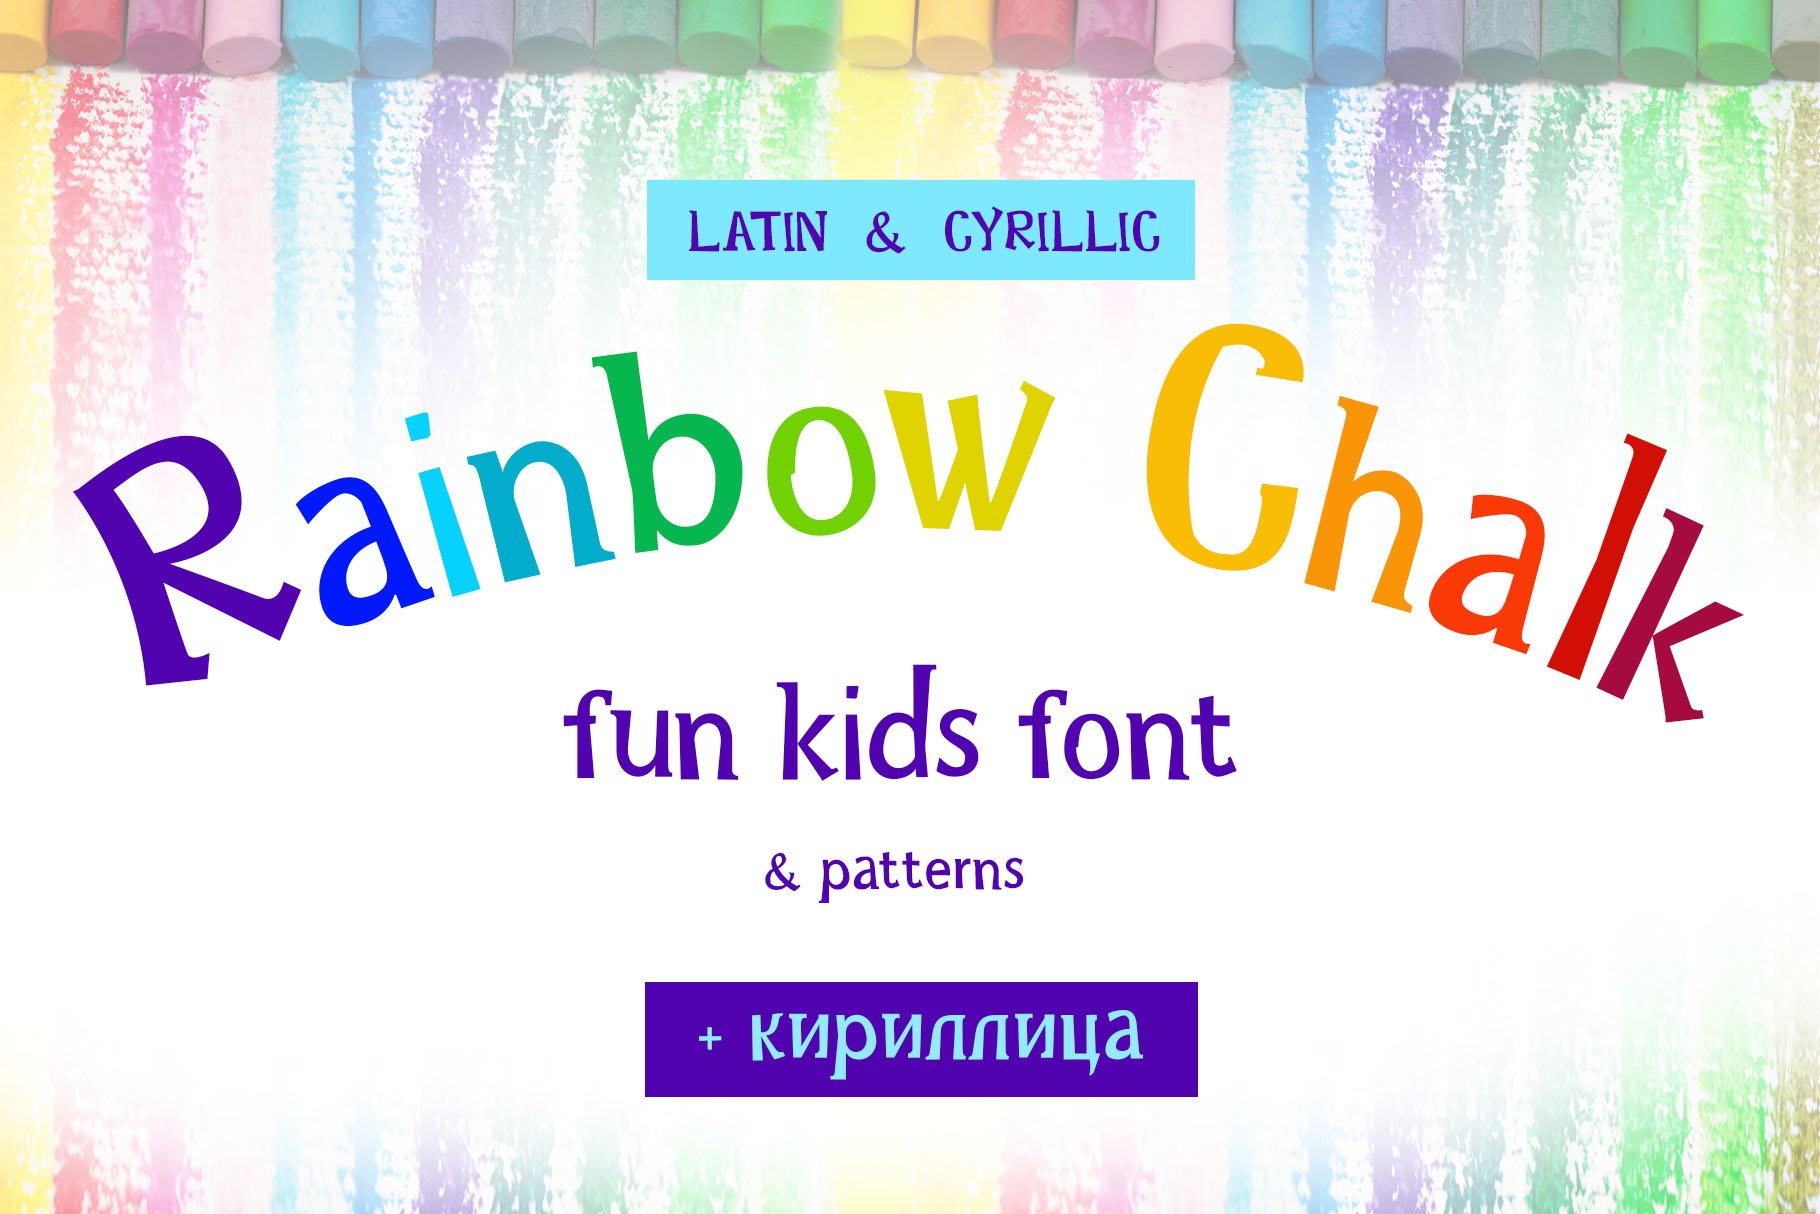 Rainbow Chalk Cyrillic font+Patterns cover image.